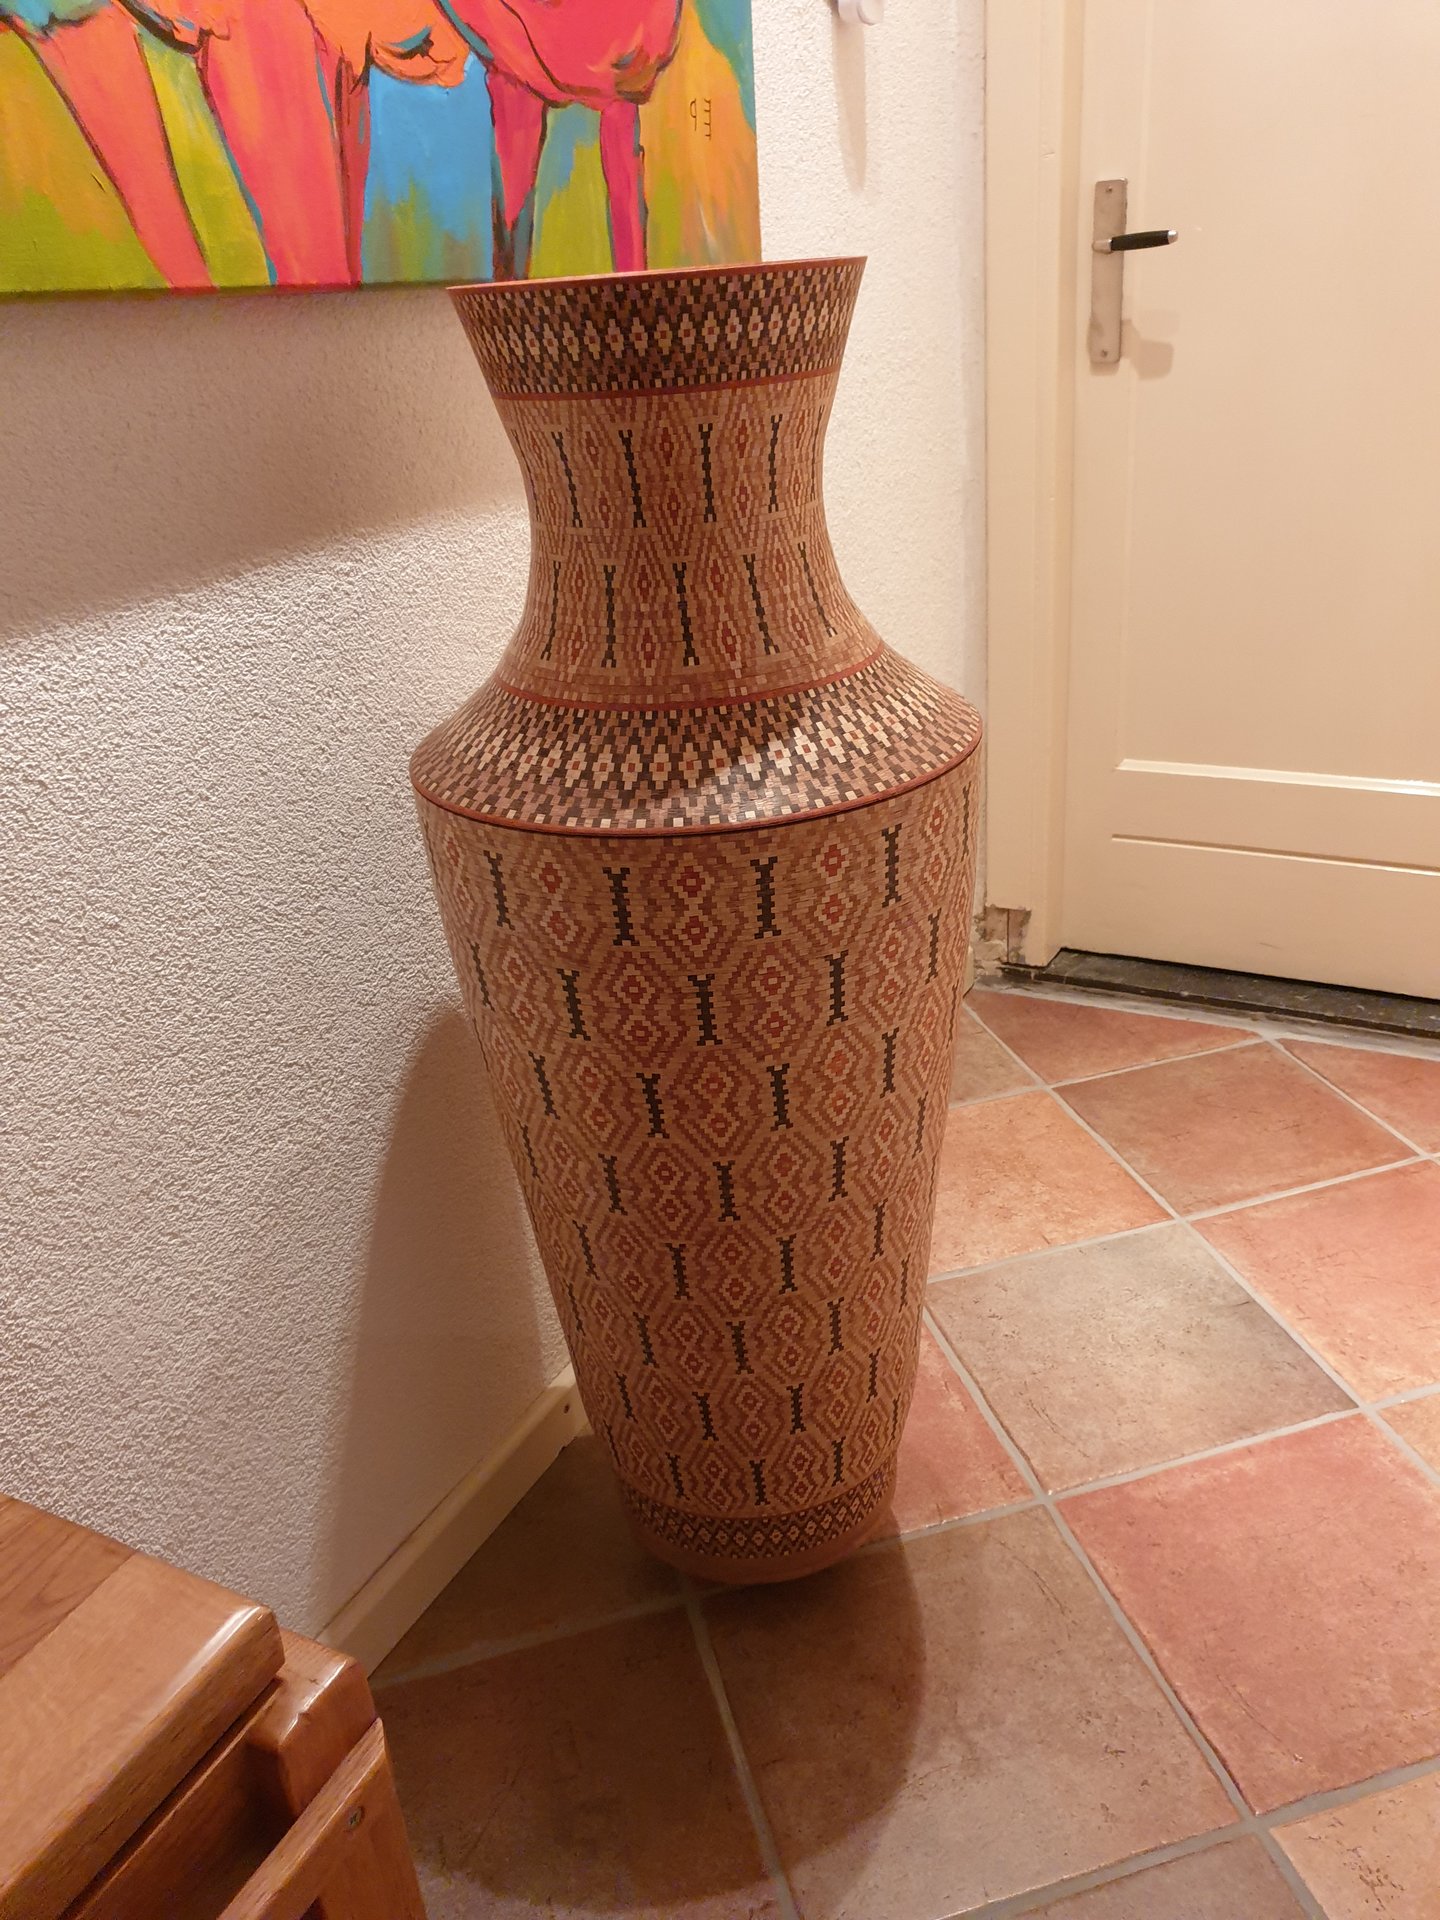 Segmented large vase.